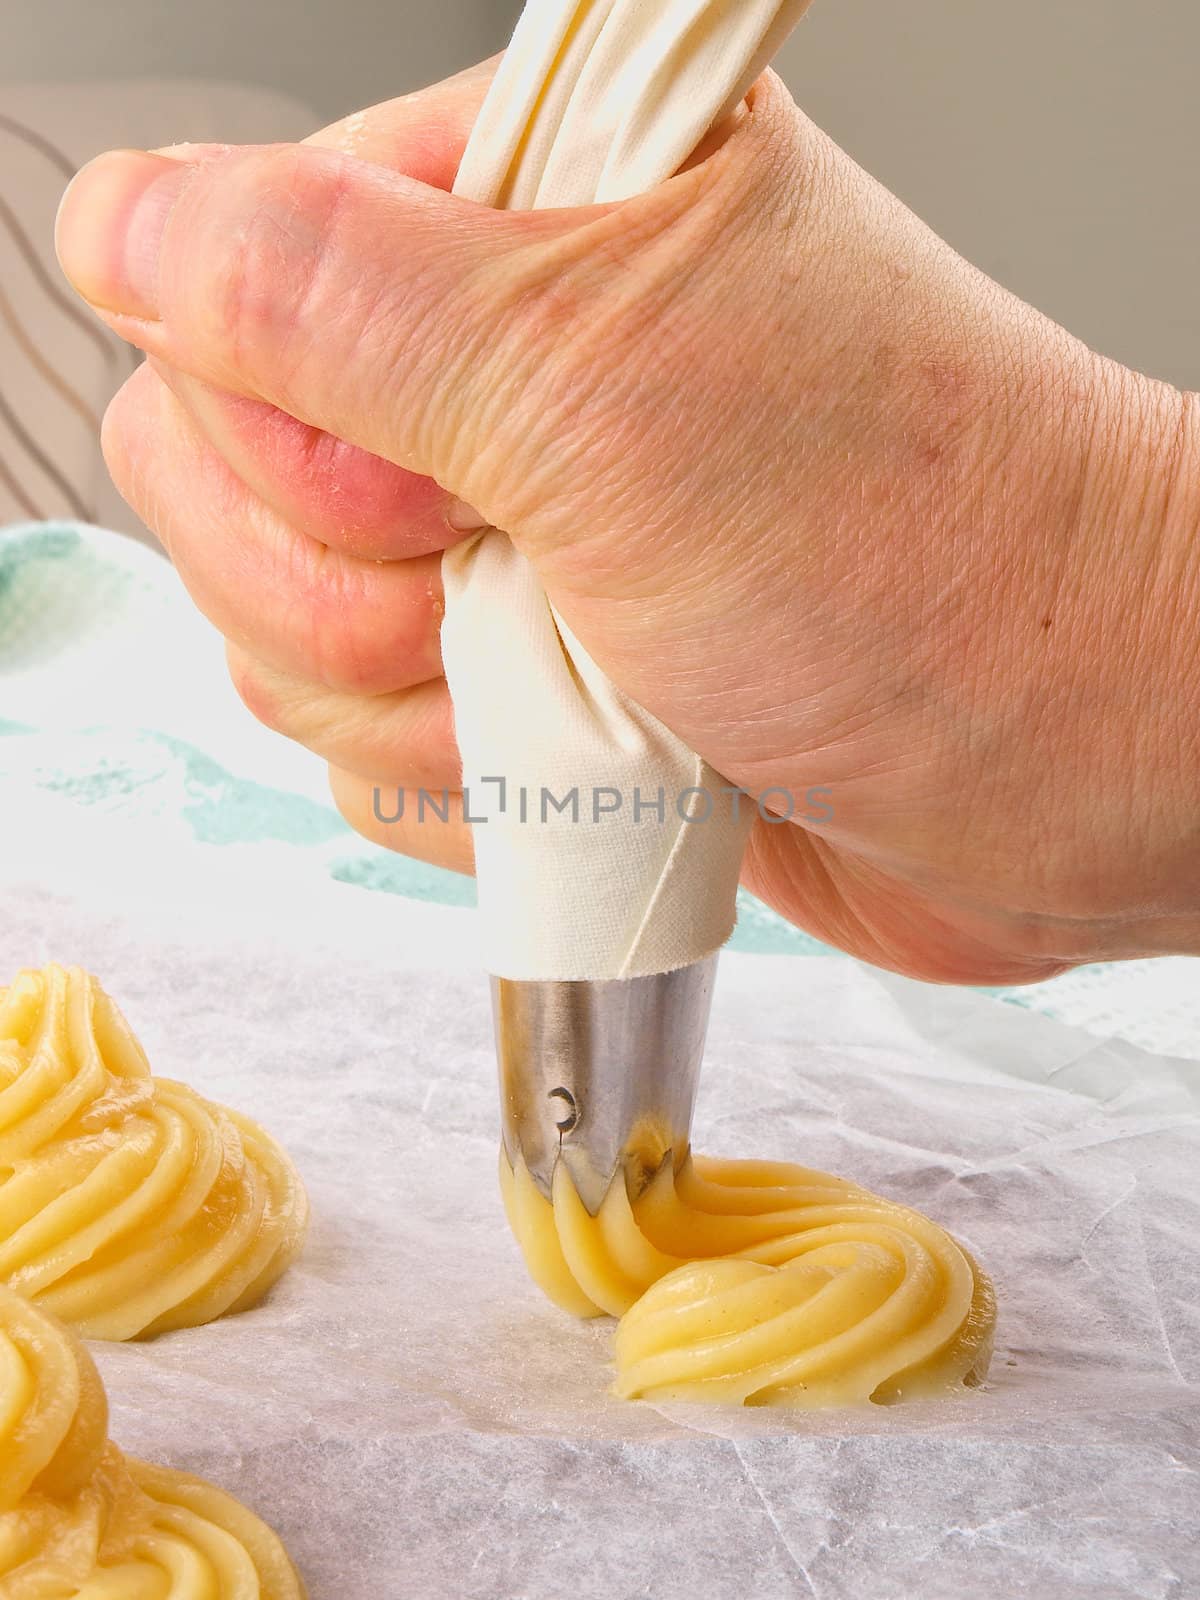 Baker making Choux pastry dough by dotweb